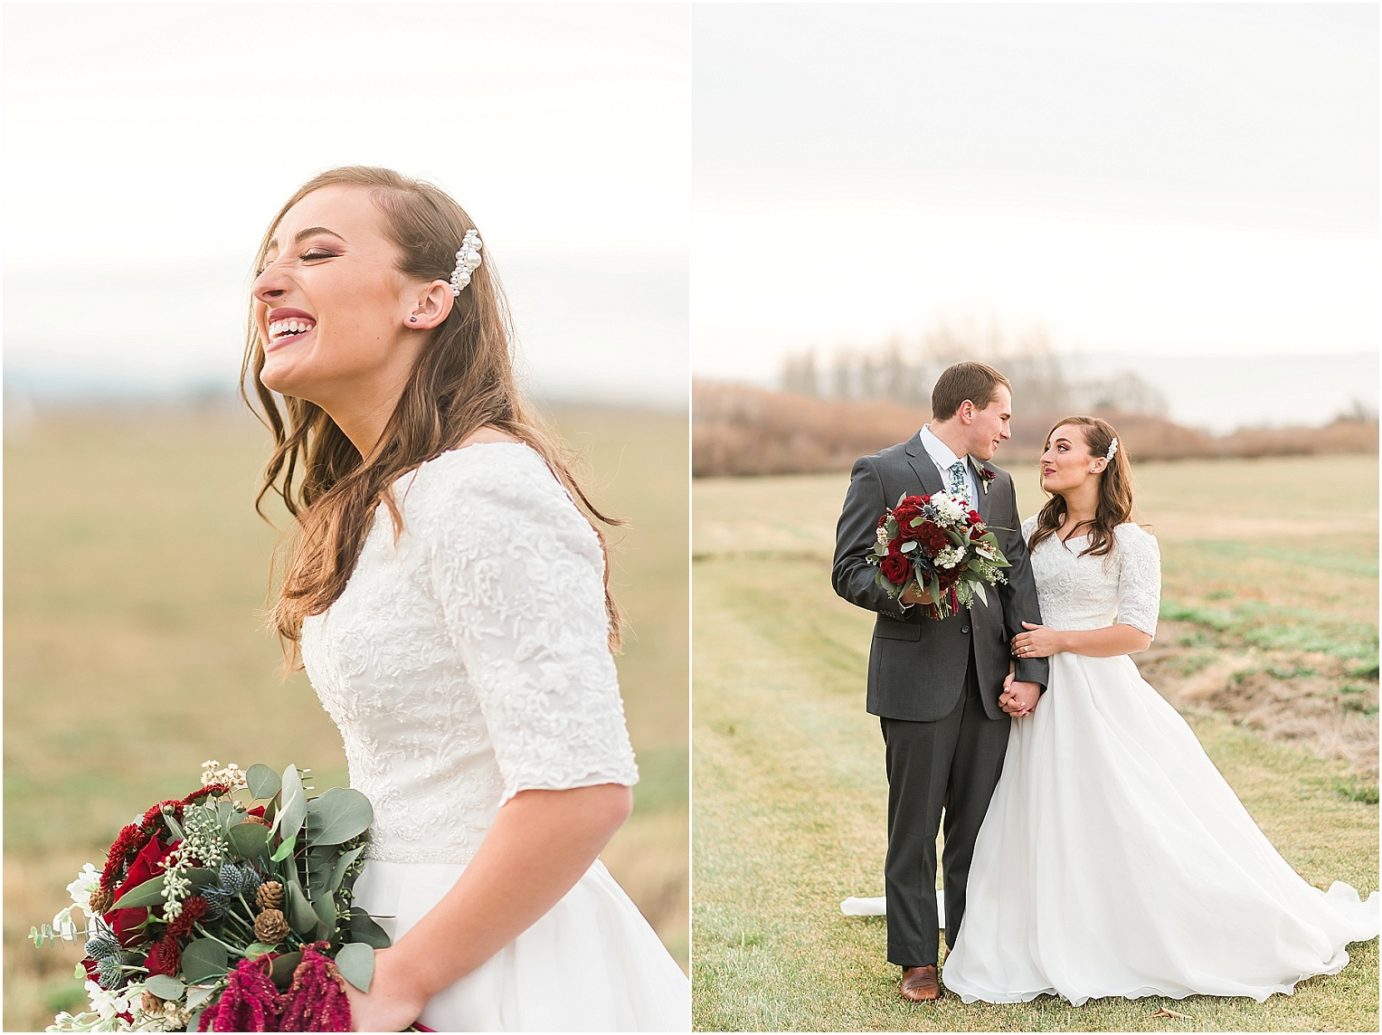 Ellensburg backyard wedding- bride in a modest wedding dress with maroon flowers